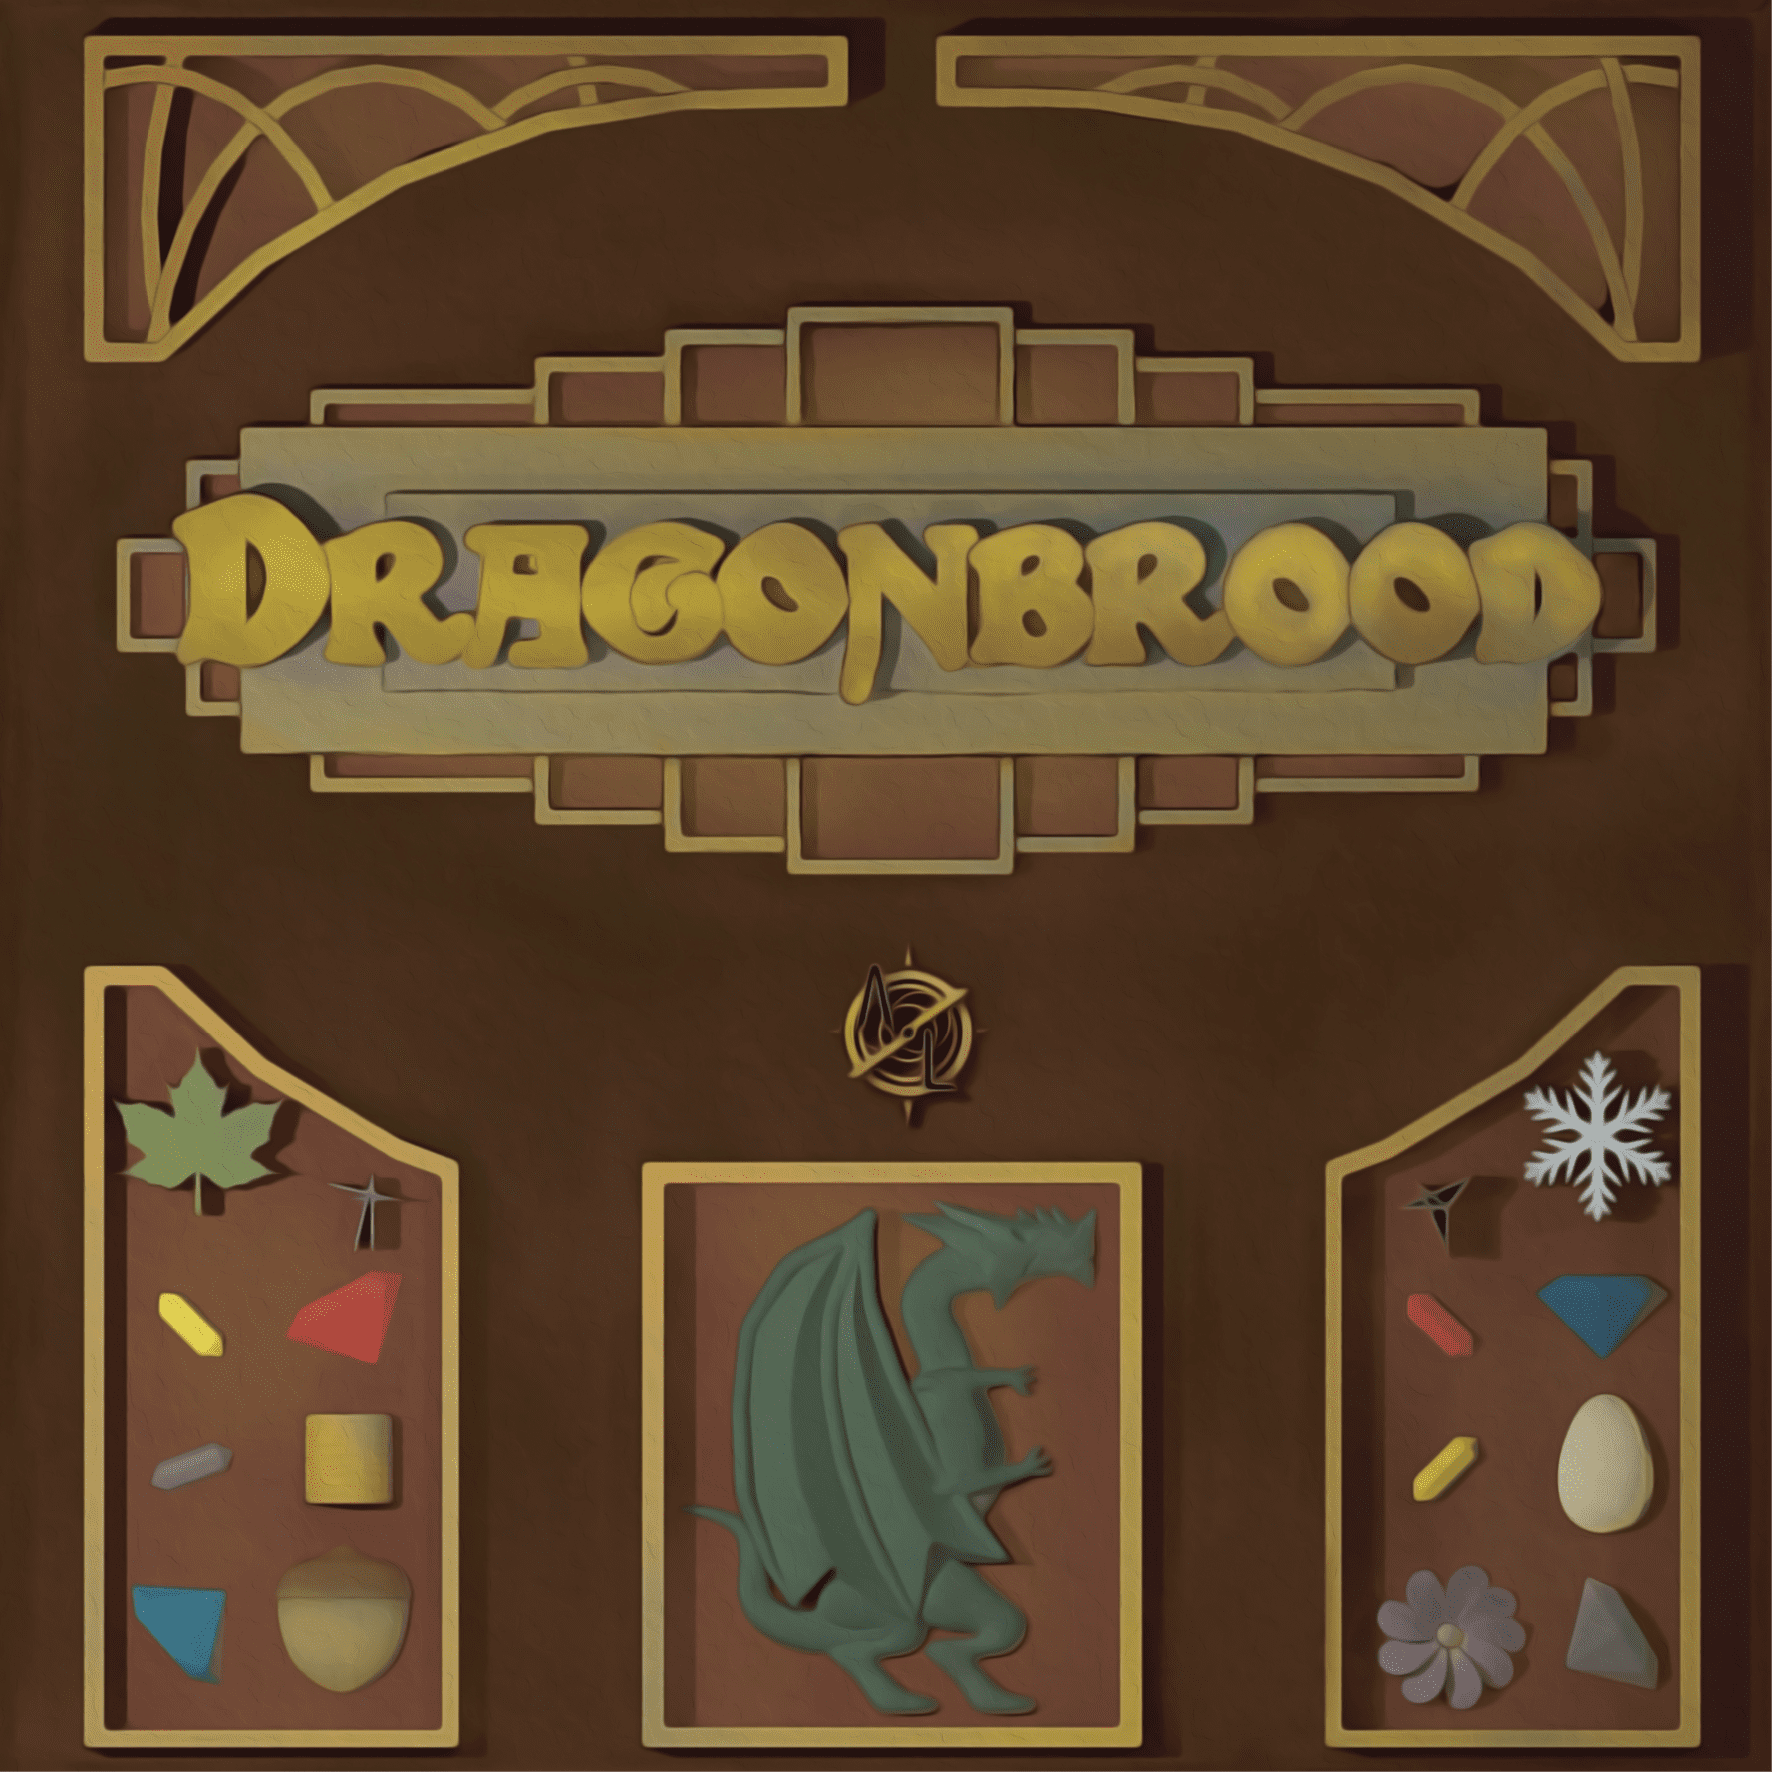 Dragonbrood